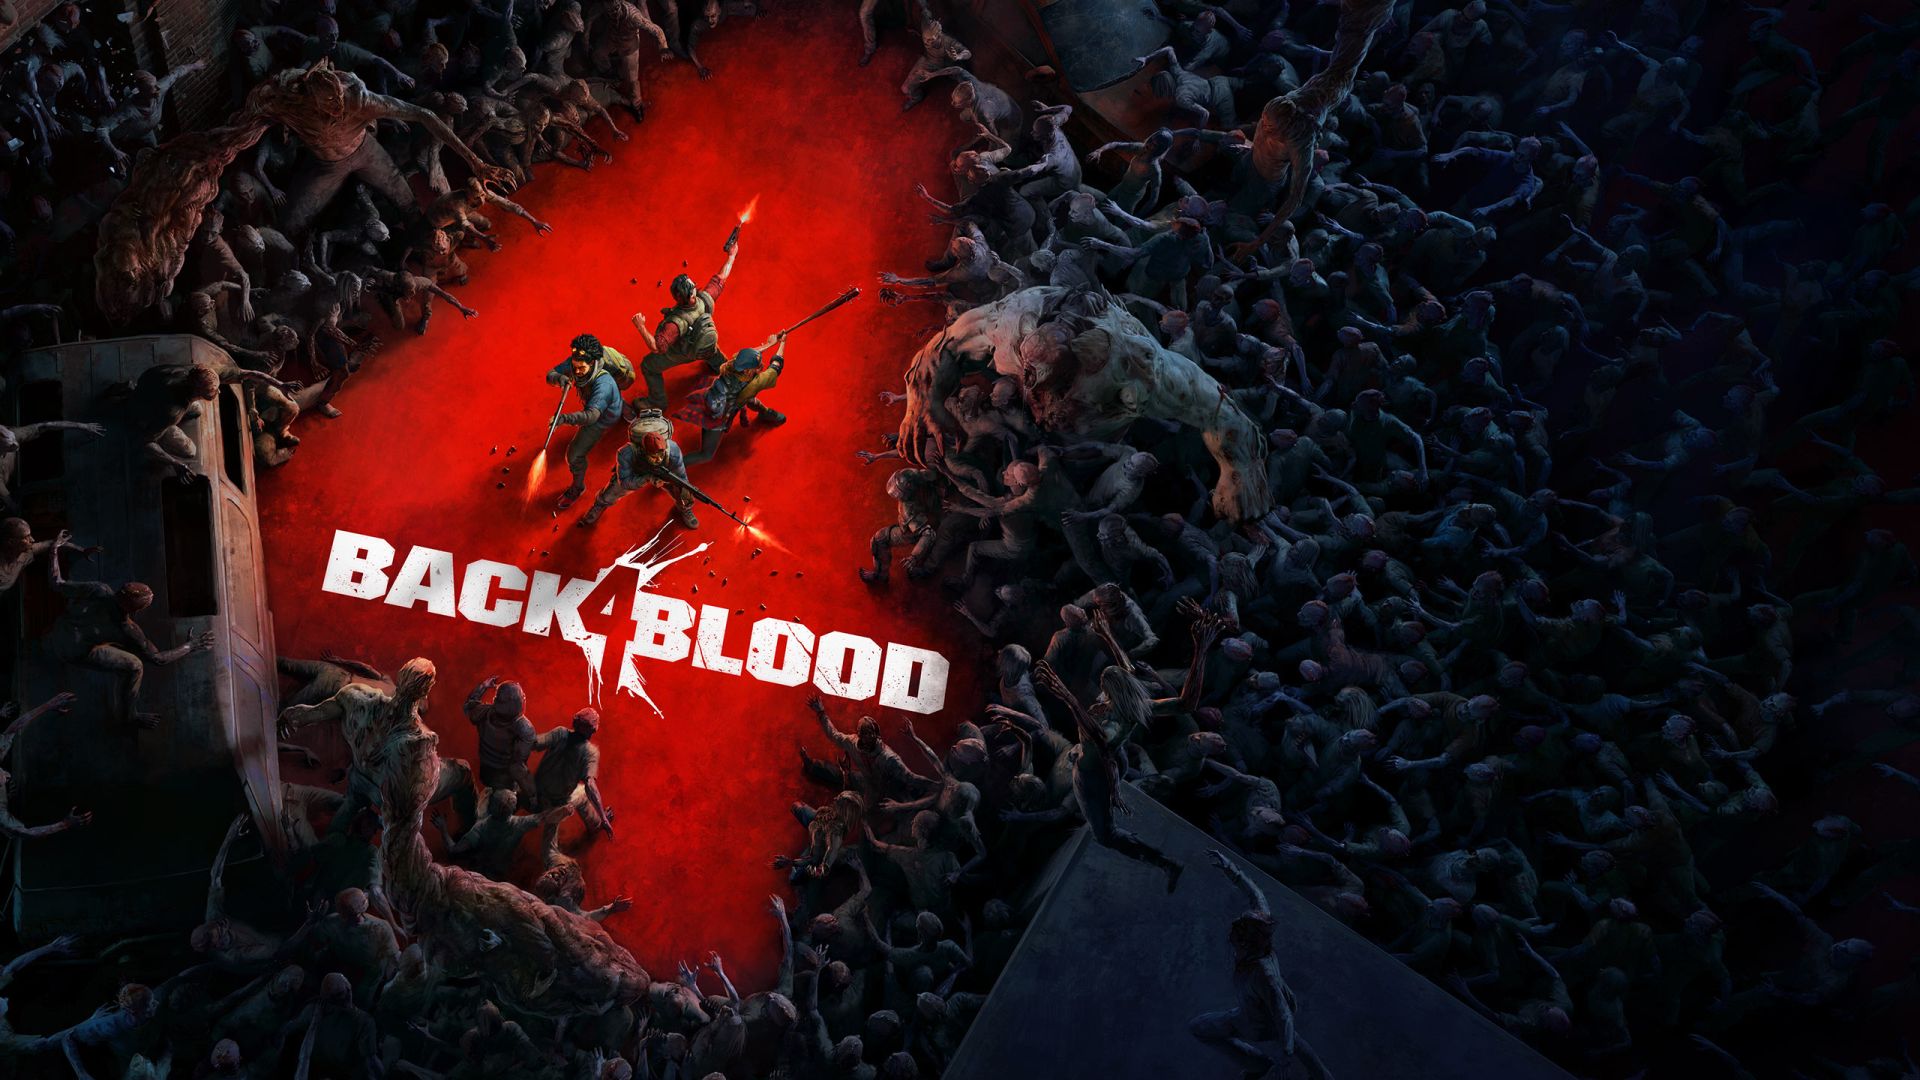 Back 4 Blood เกม CO-OP เอาตัวรอดจากซอมบี้ โดยทีมผู้สร้าง Left 4 Dead พร้อมเปิดให้ทดสอบเล่น Closed Alpha แล้วในวันที่ 17 ธันวาคมนี้